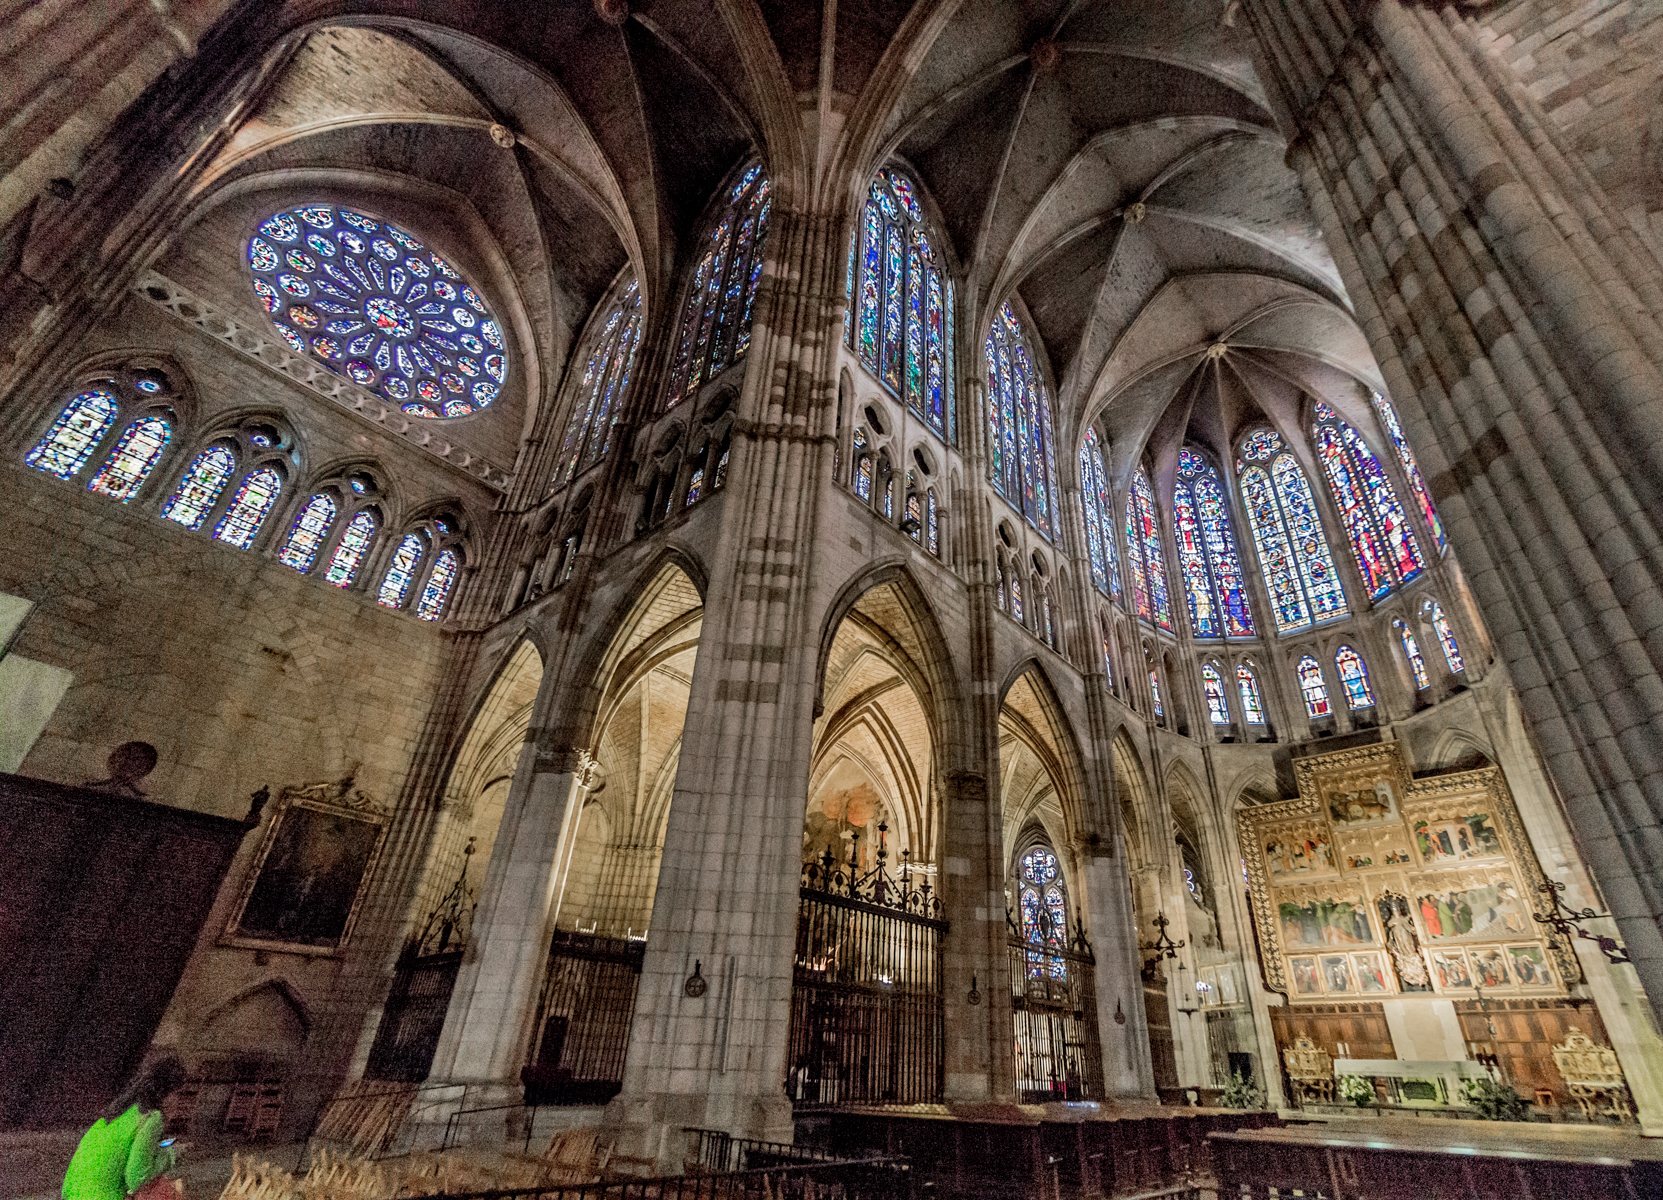 North transept at left to the main altar of the Catedral de Santa María de Regla de León (Spain) | Photo by Mike Hudak